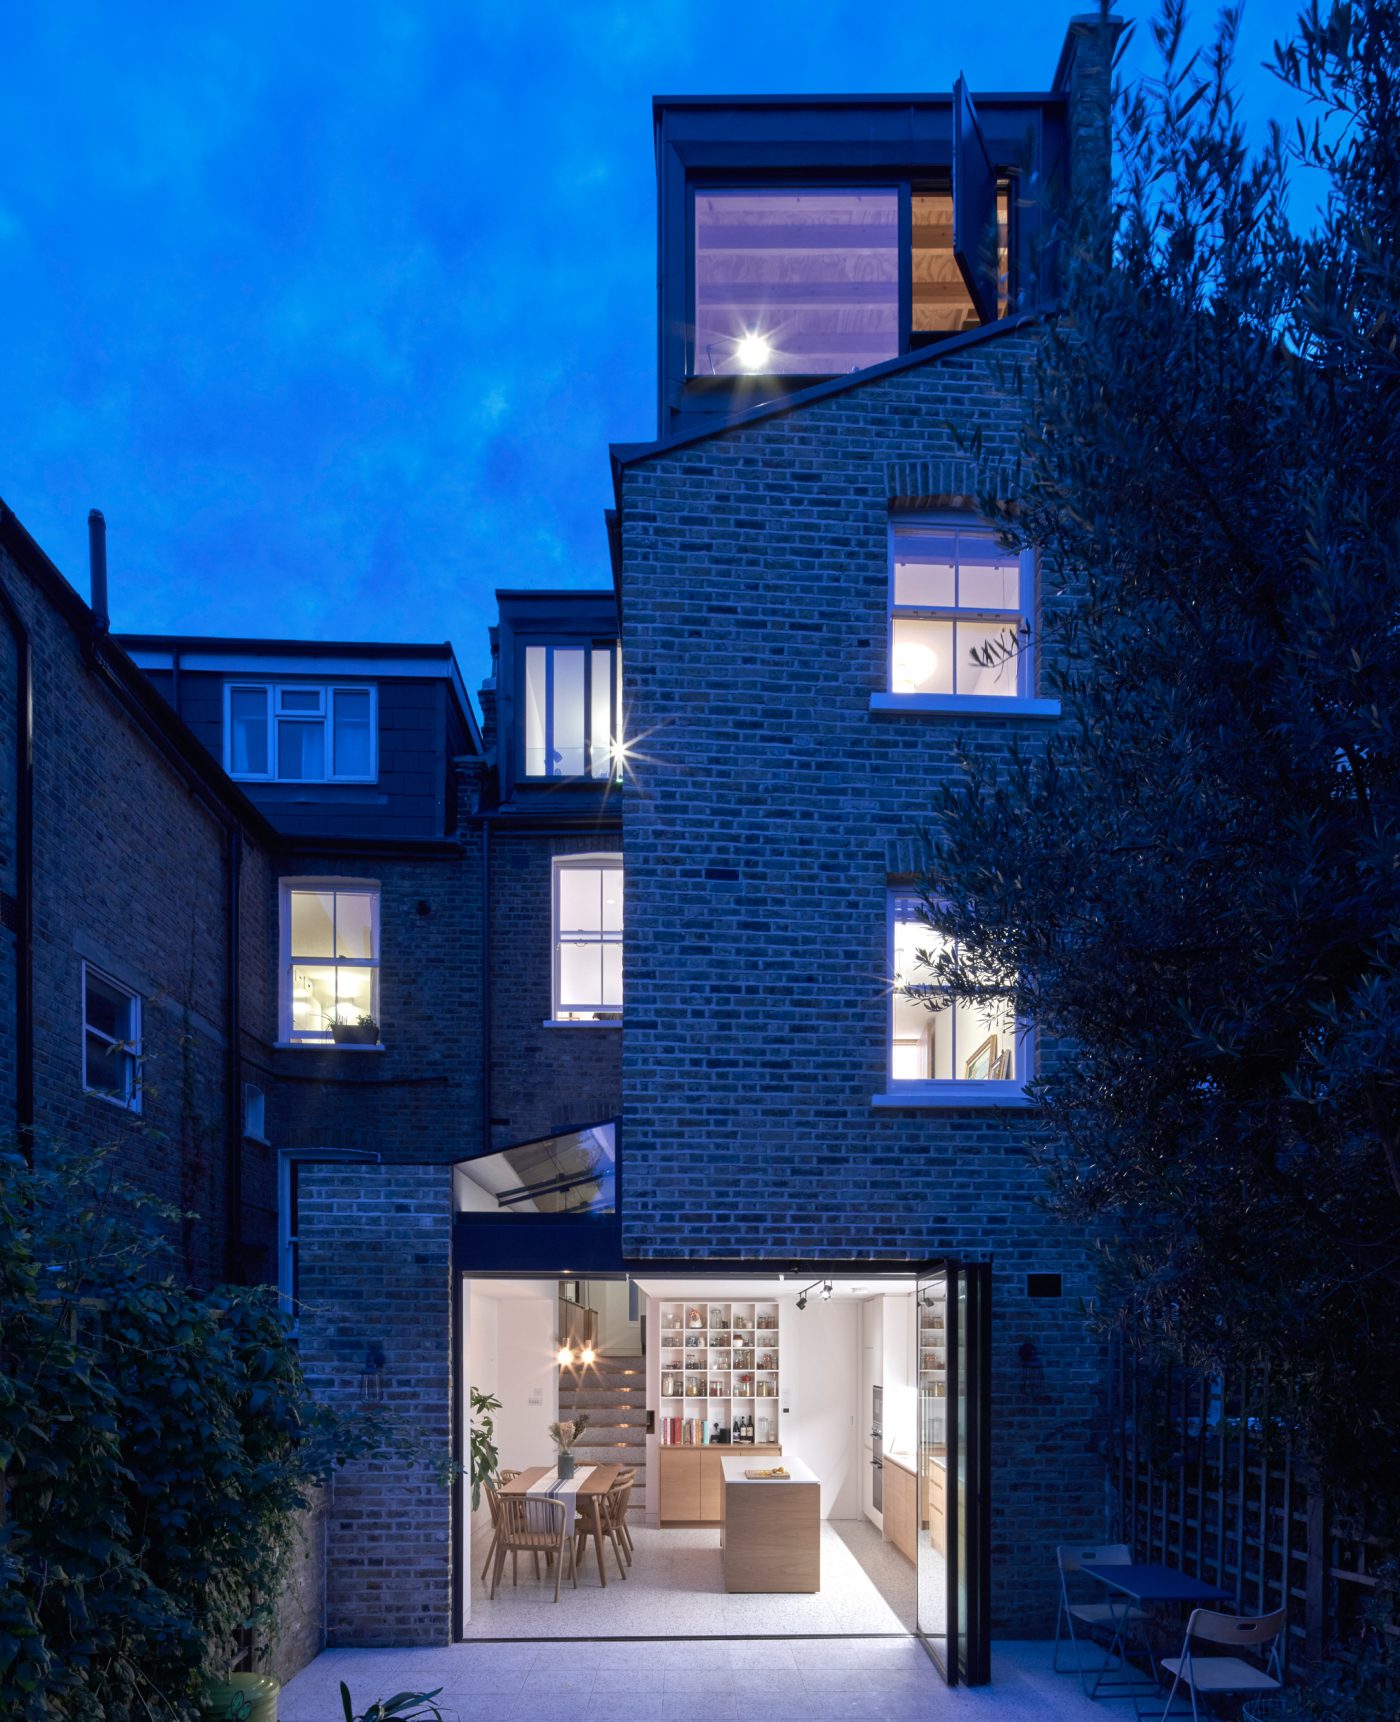 London design studio - House of Houses